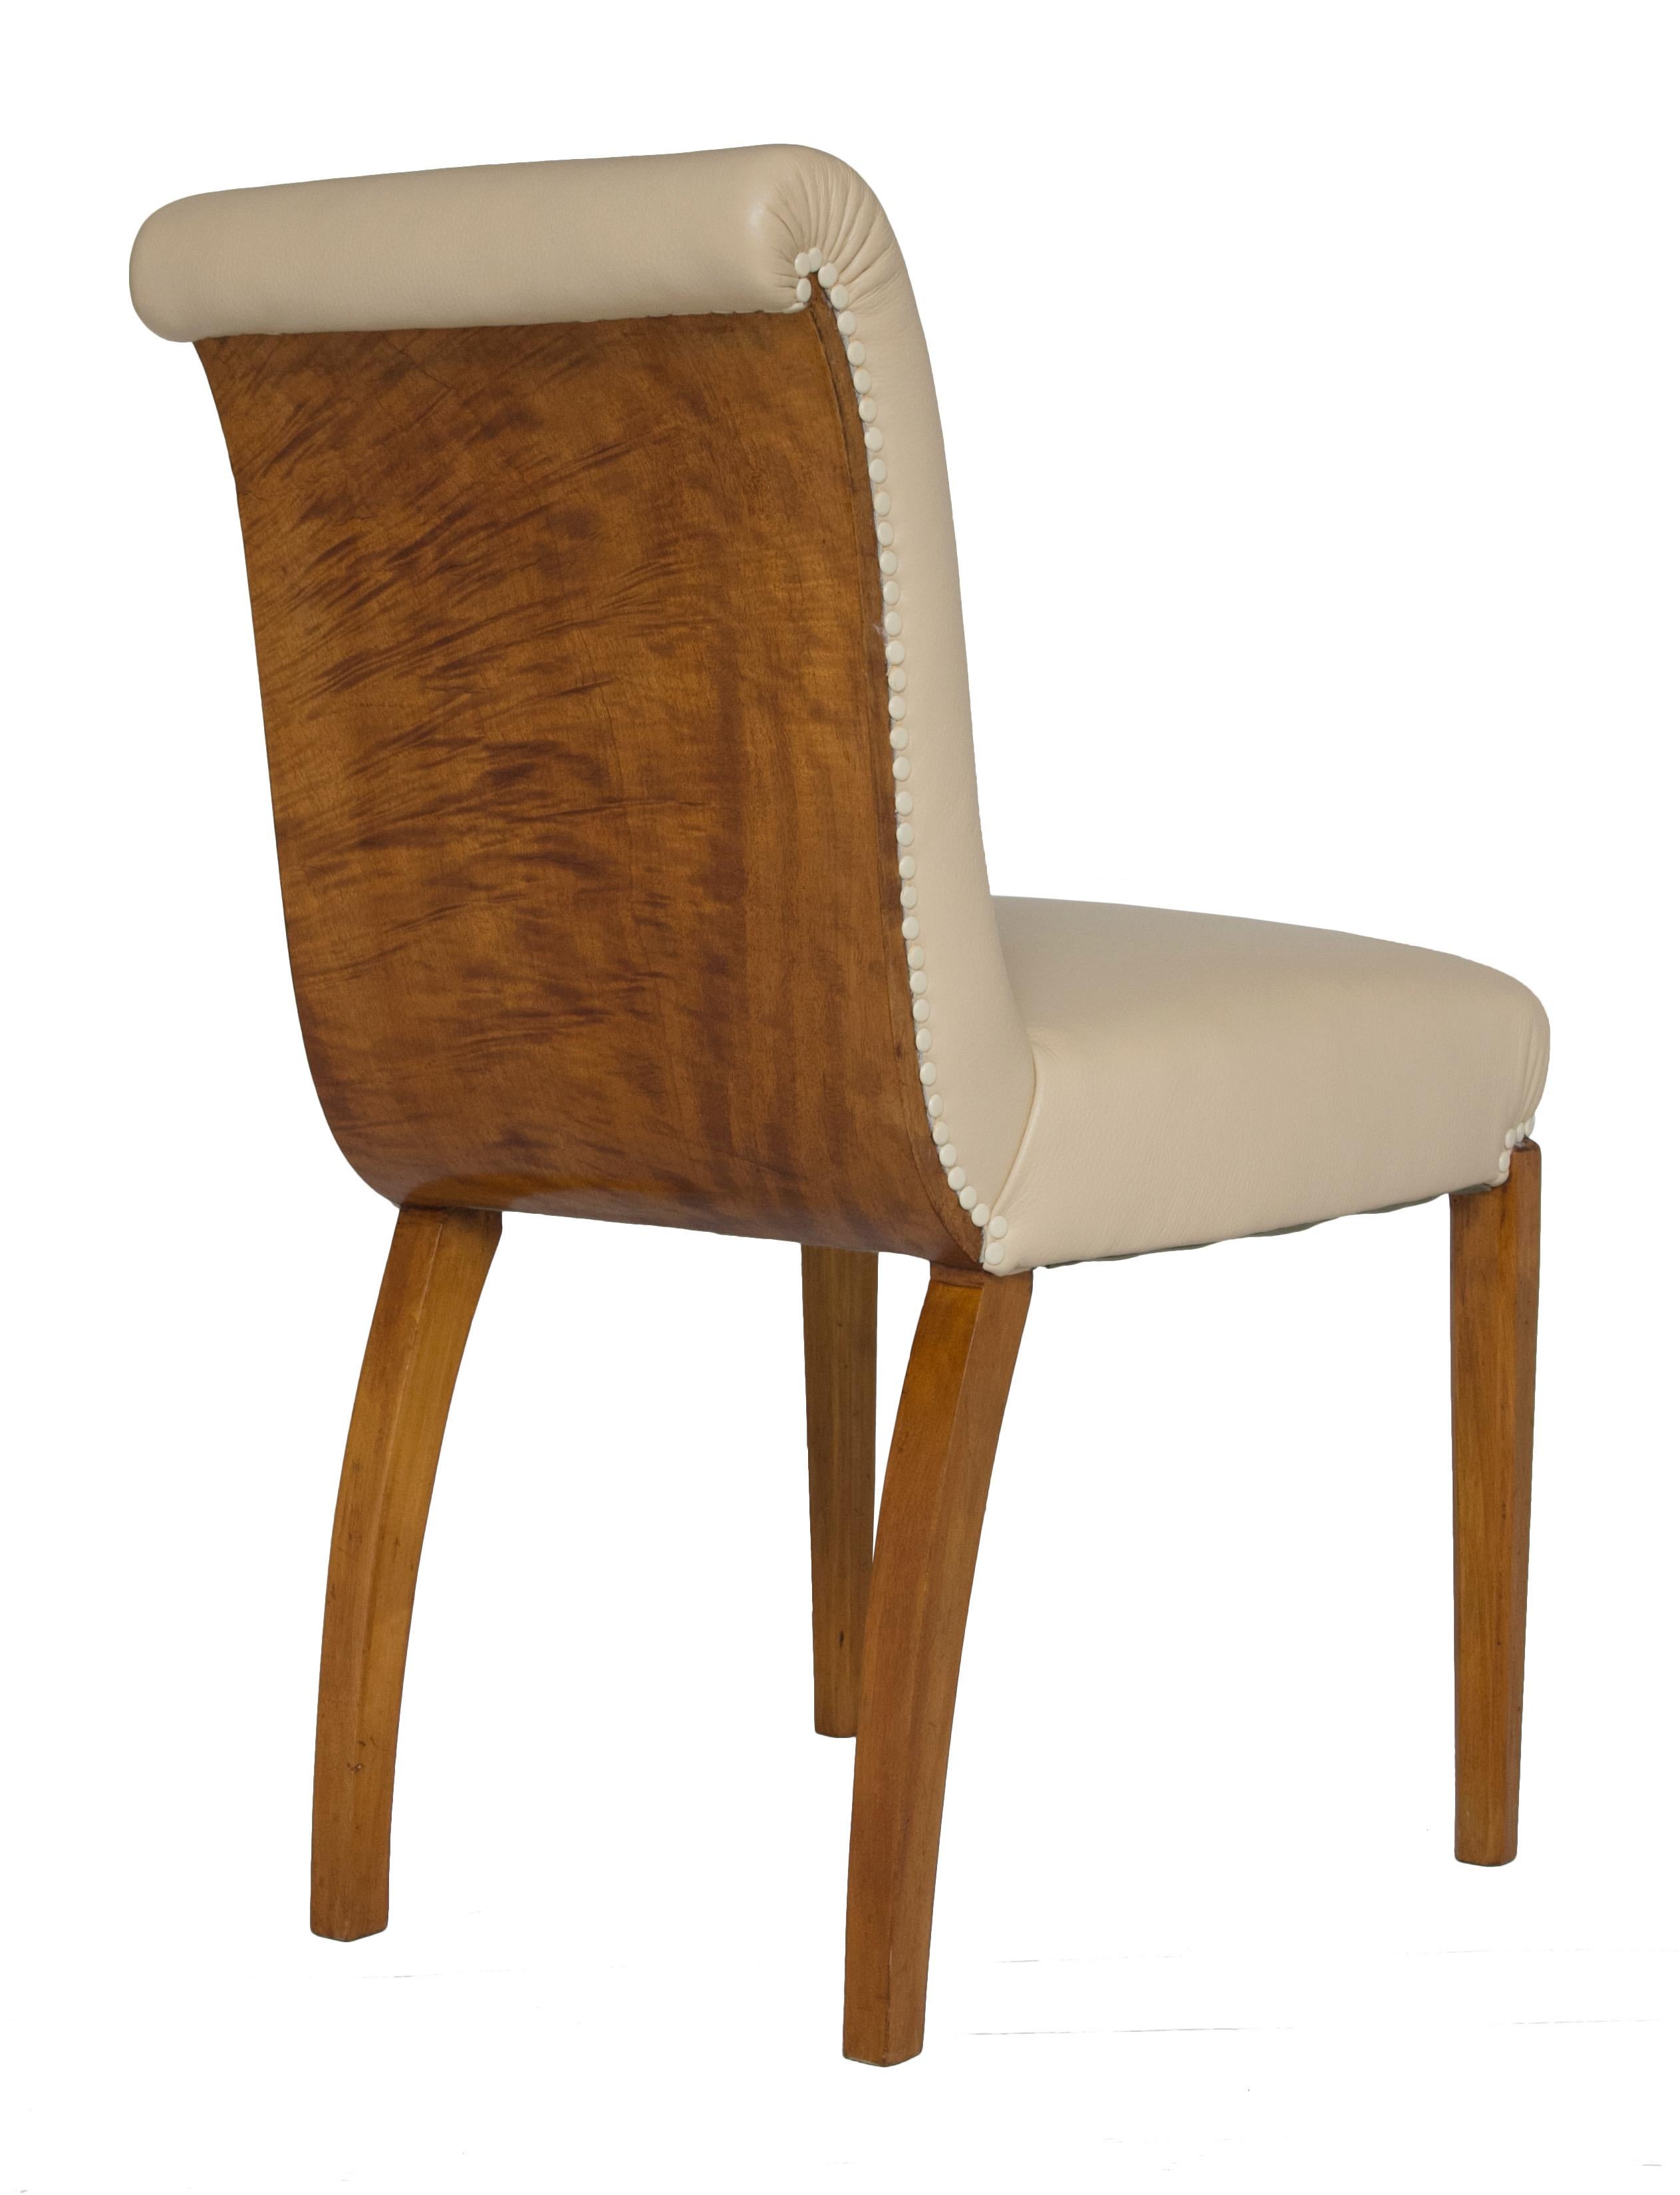 British Art Deco Chair